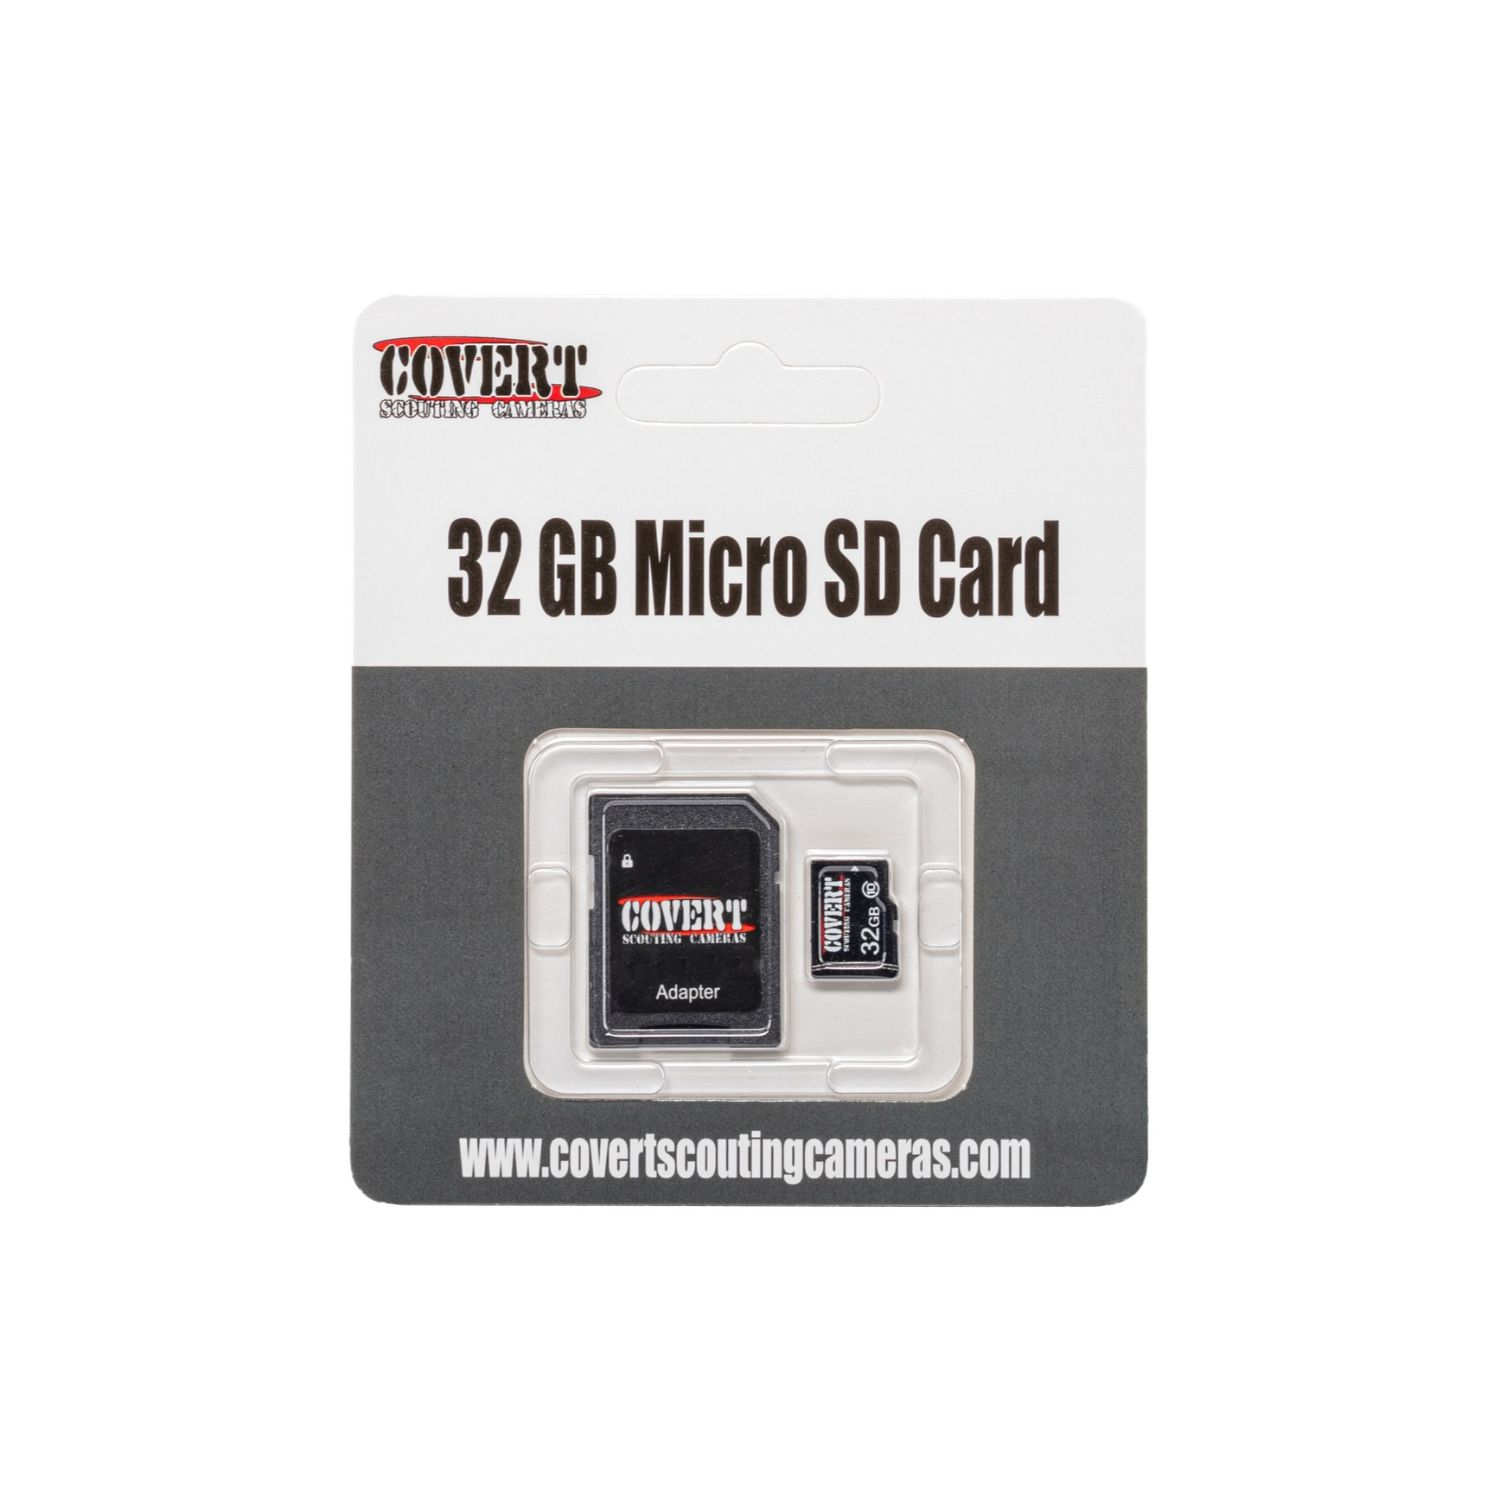 Covert 32GB Micro SD Card